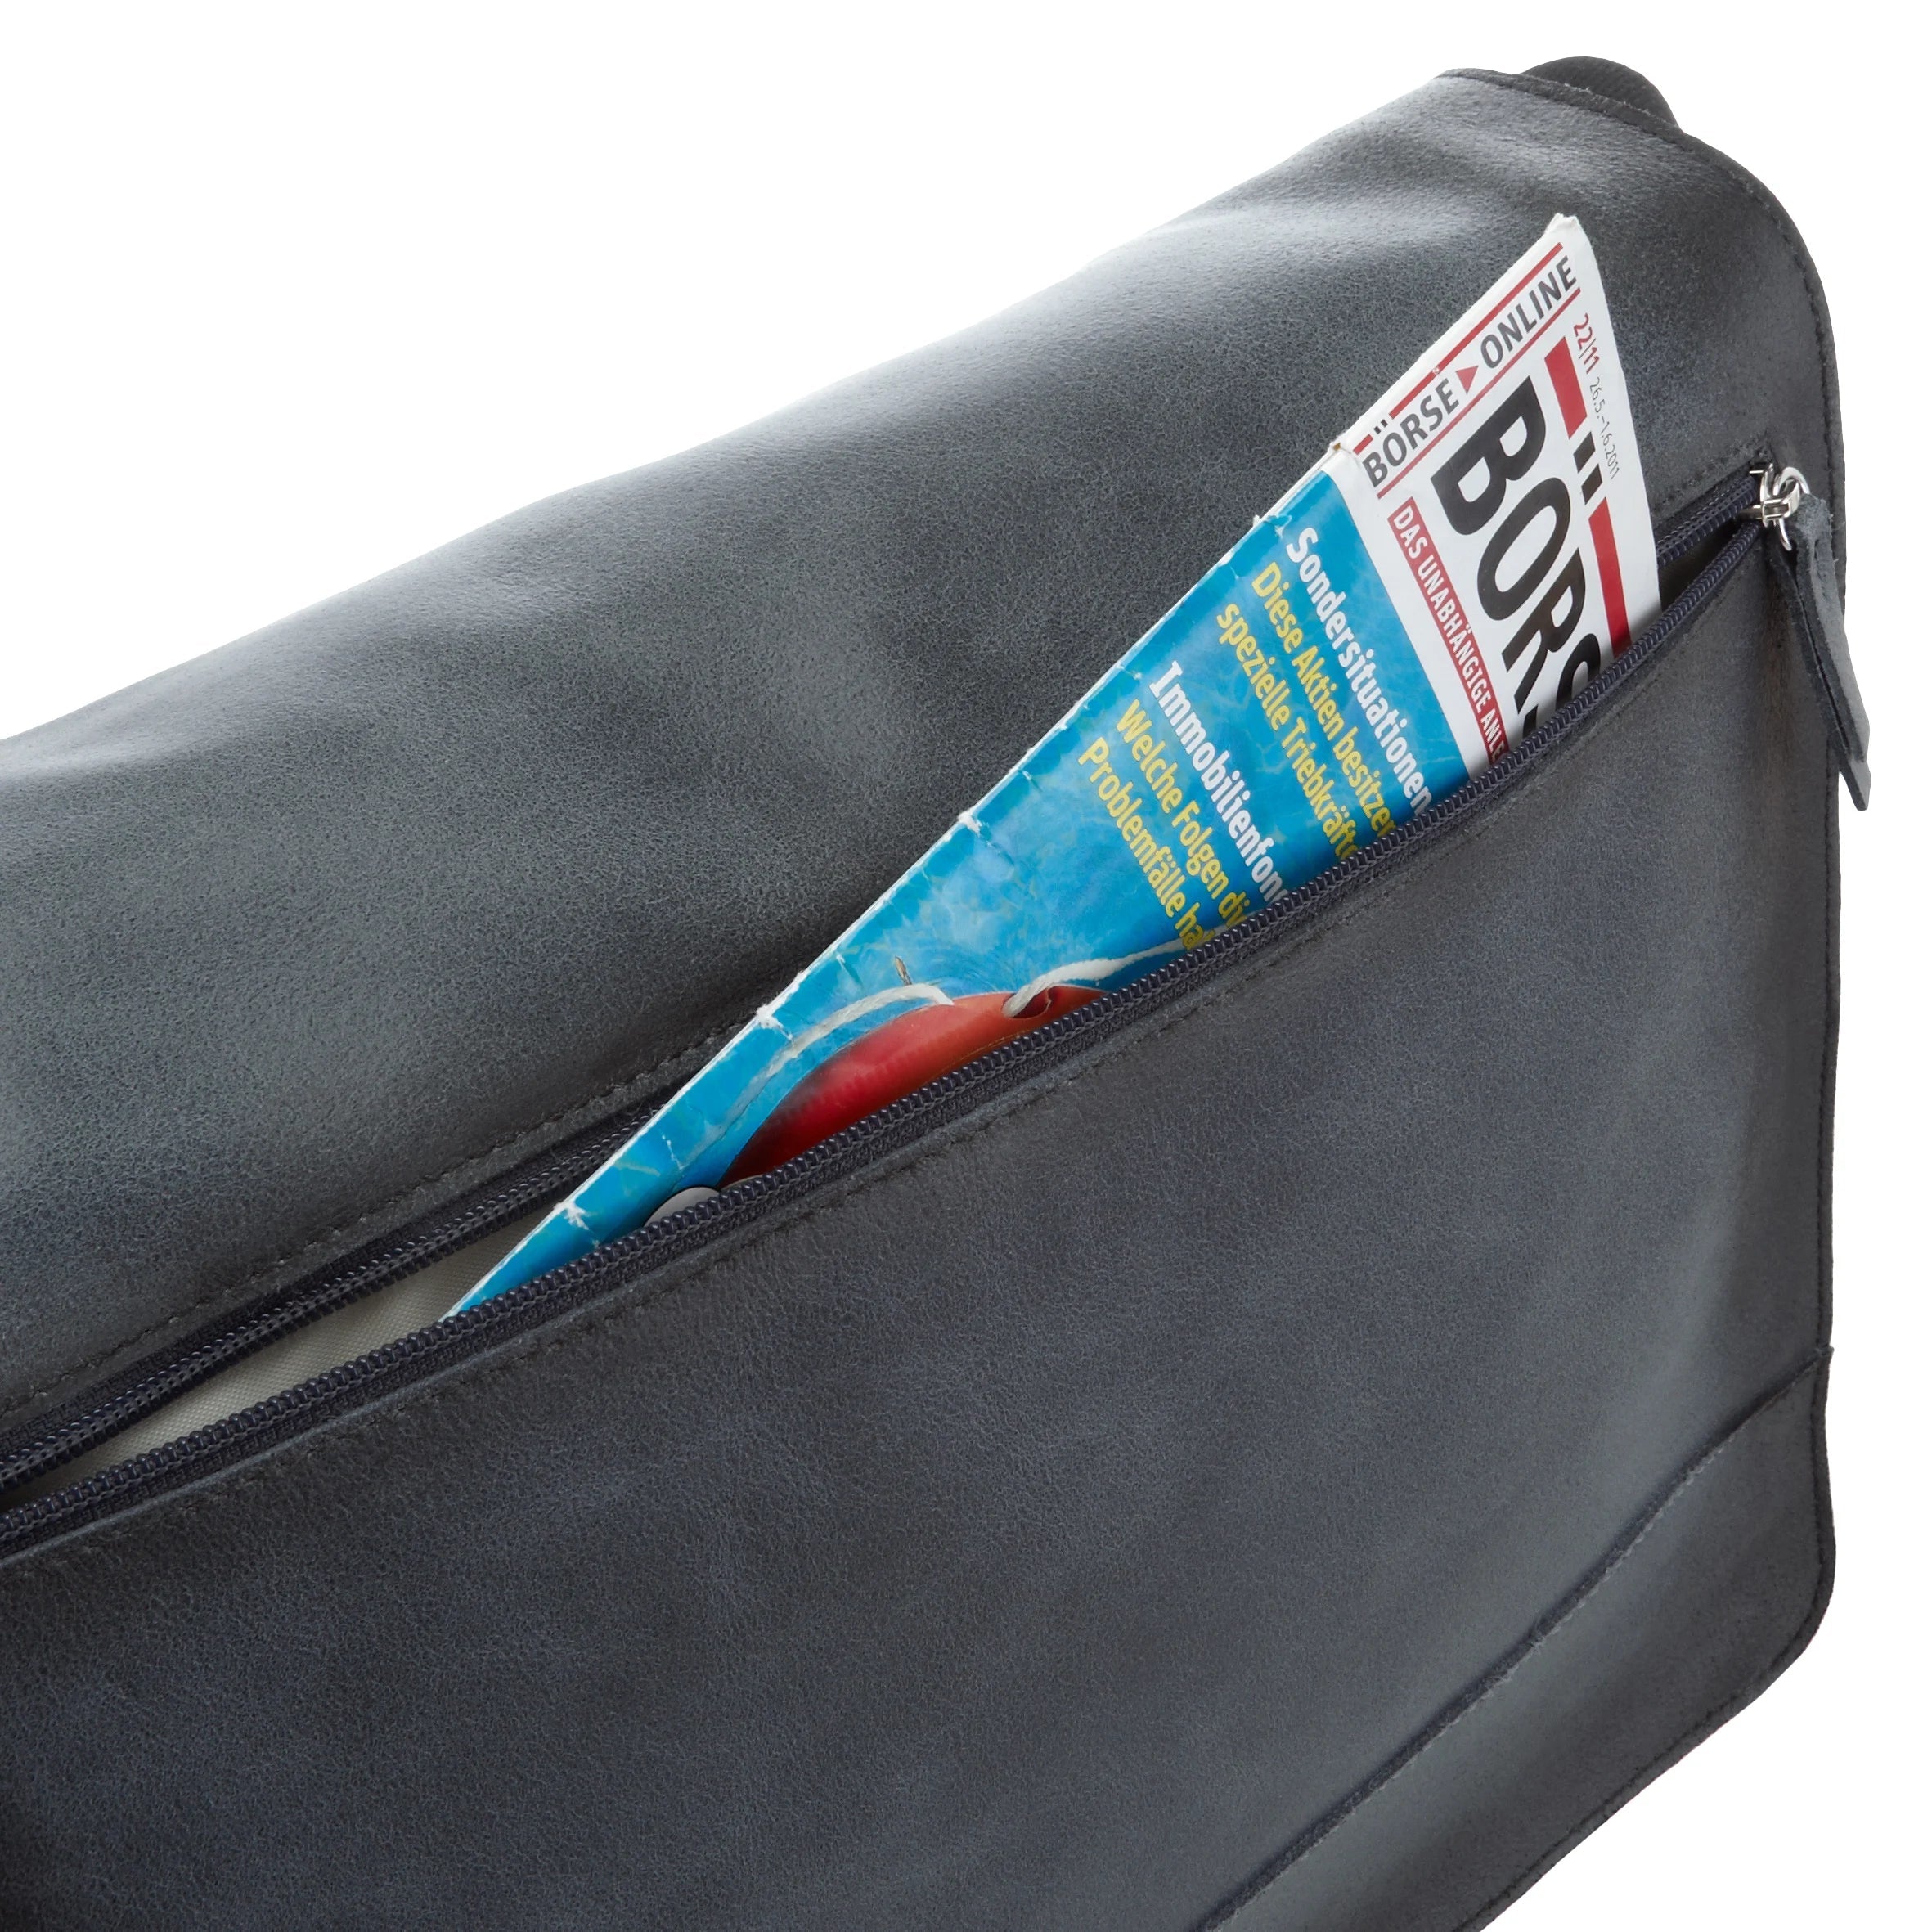 Jost Narvik shoulder bag with laptop compartment 38 cm - brown